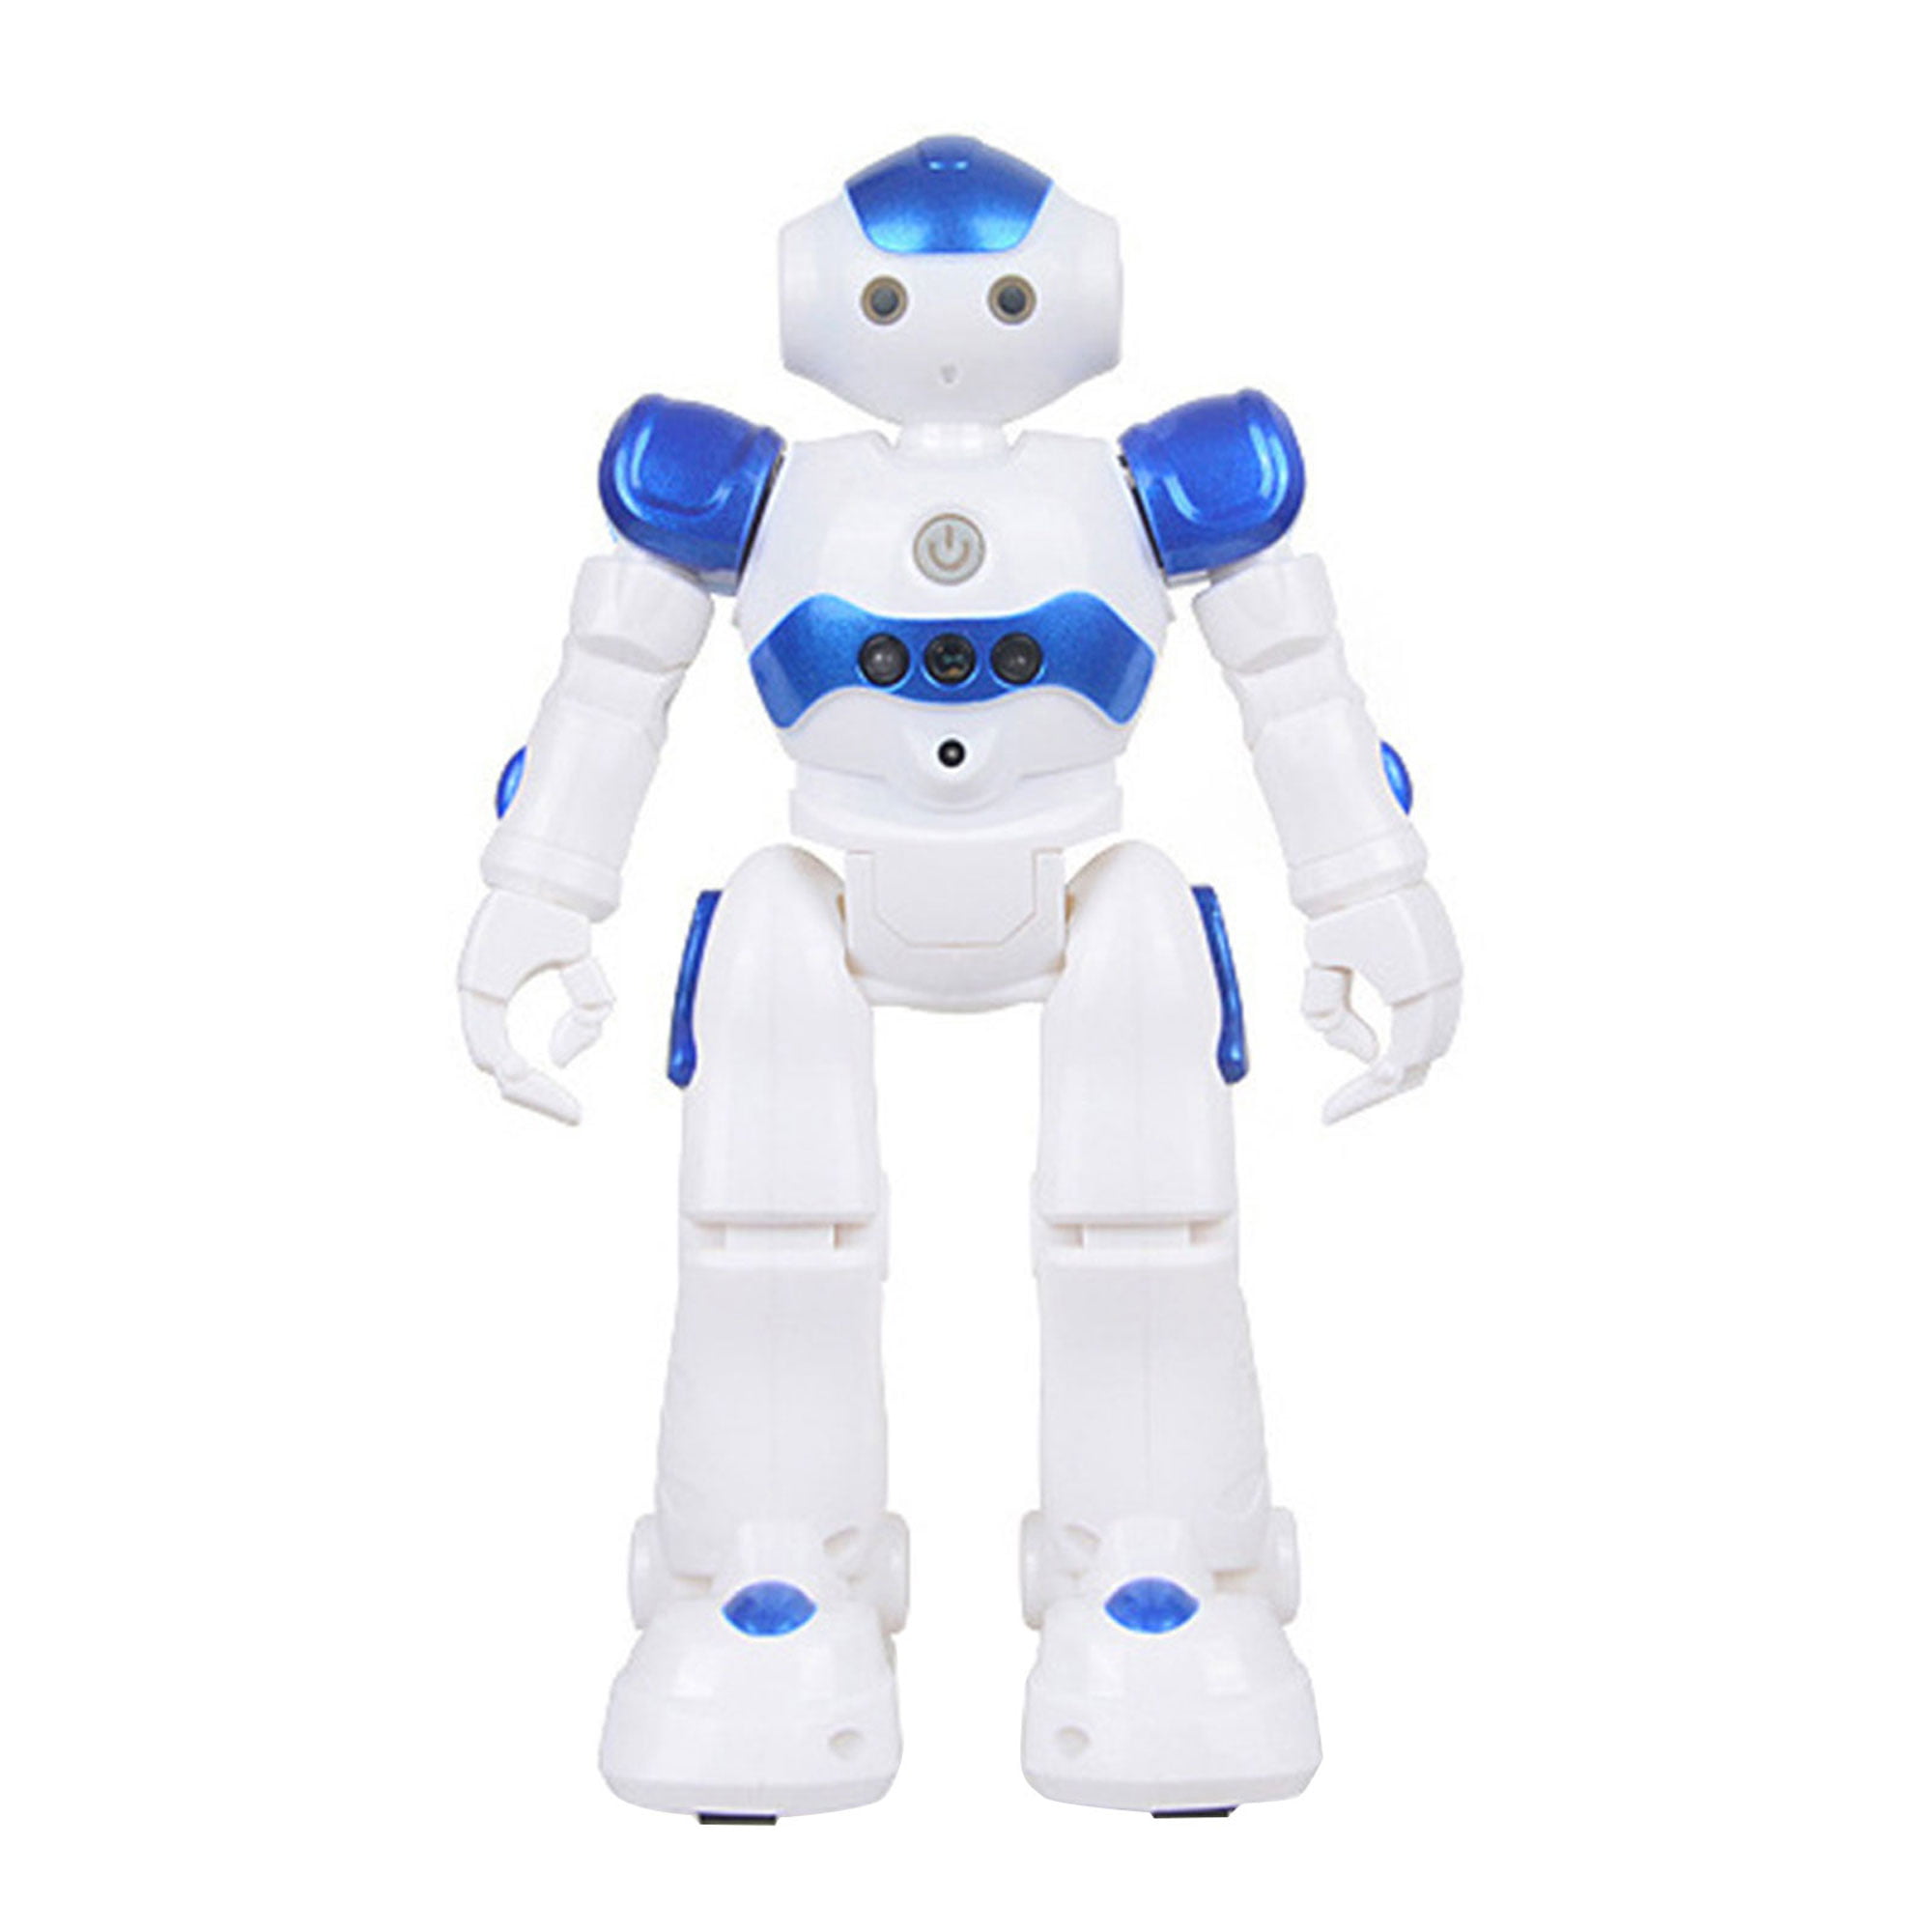 RC Robot Toy Programmable Intelligent Walk Sing Dance Smart Robot for Kids Gift 